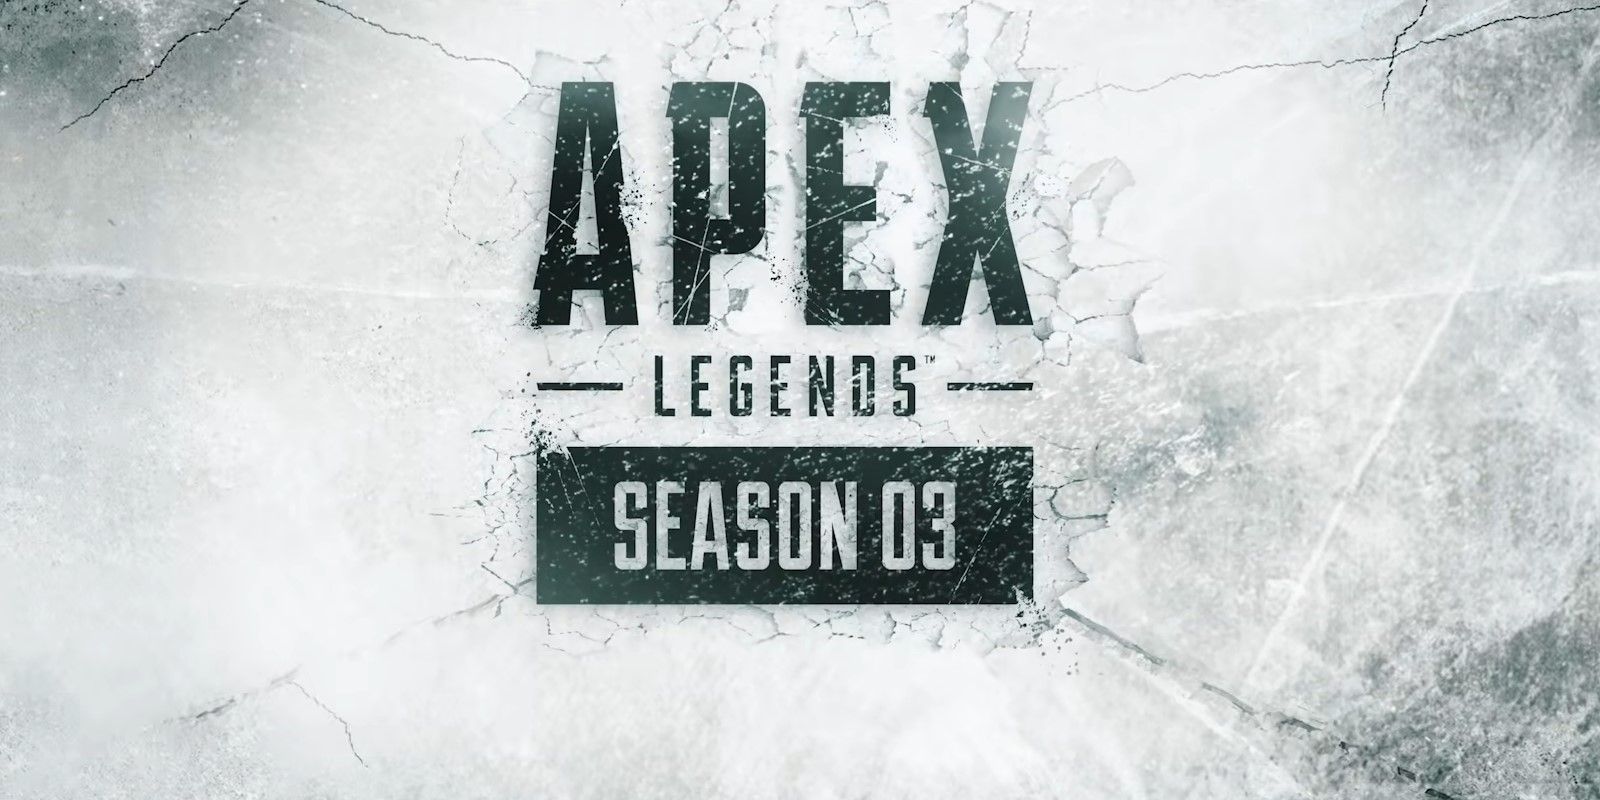 Apex legends season 3